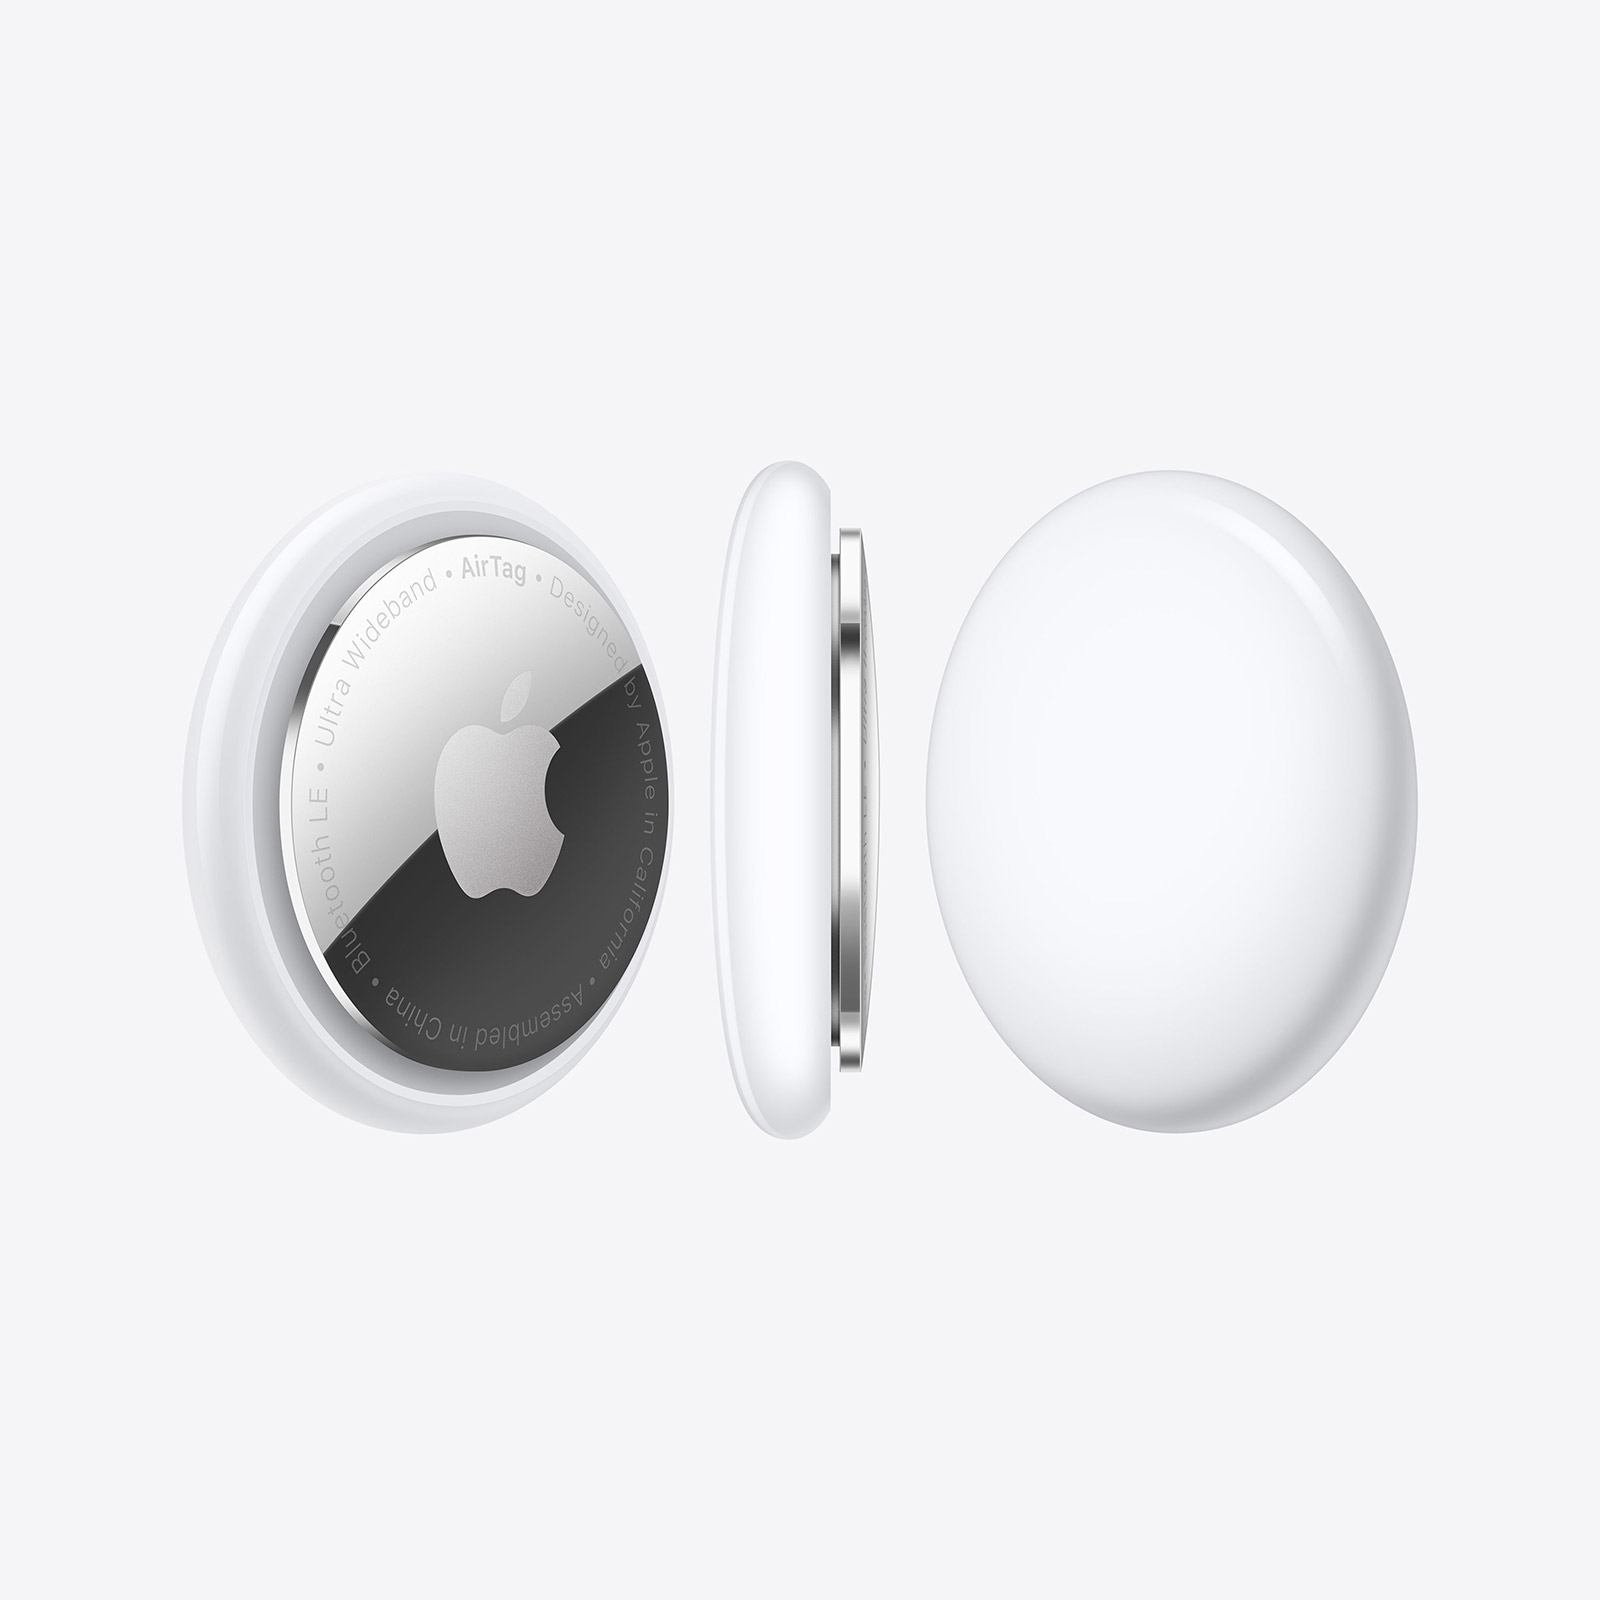 Apple-AirTag-4er-Pack-Weiss-2021-03.jpg